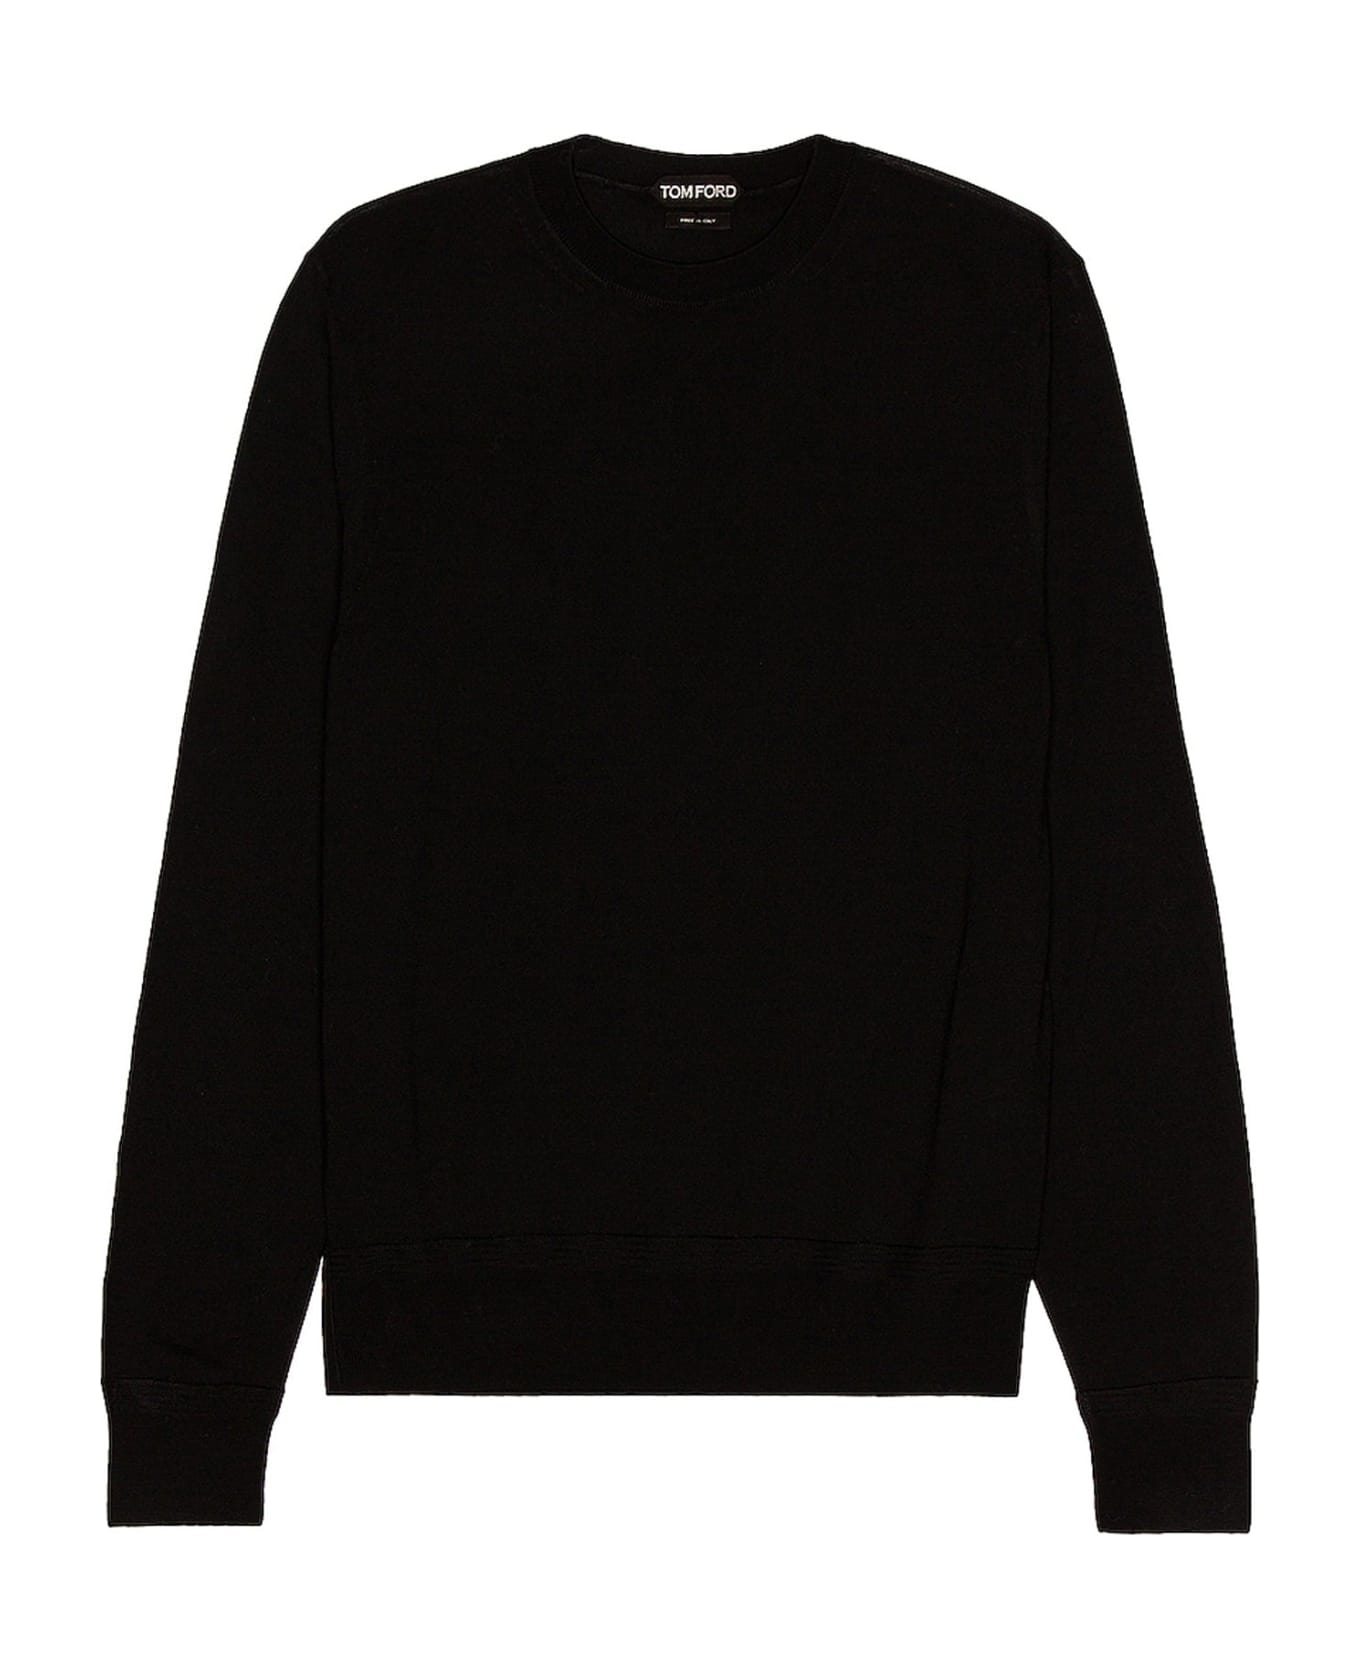 Tom Ford Cashmere Stitch Sweater - Black